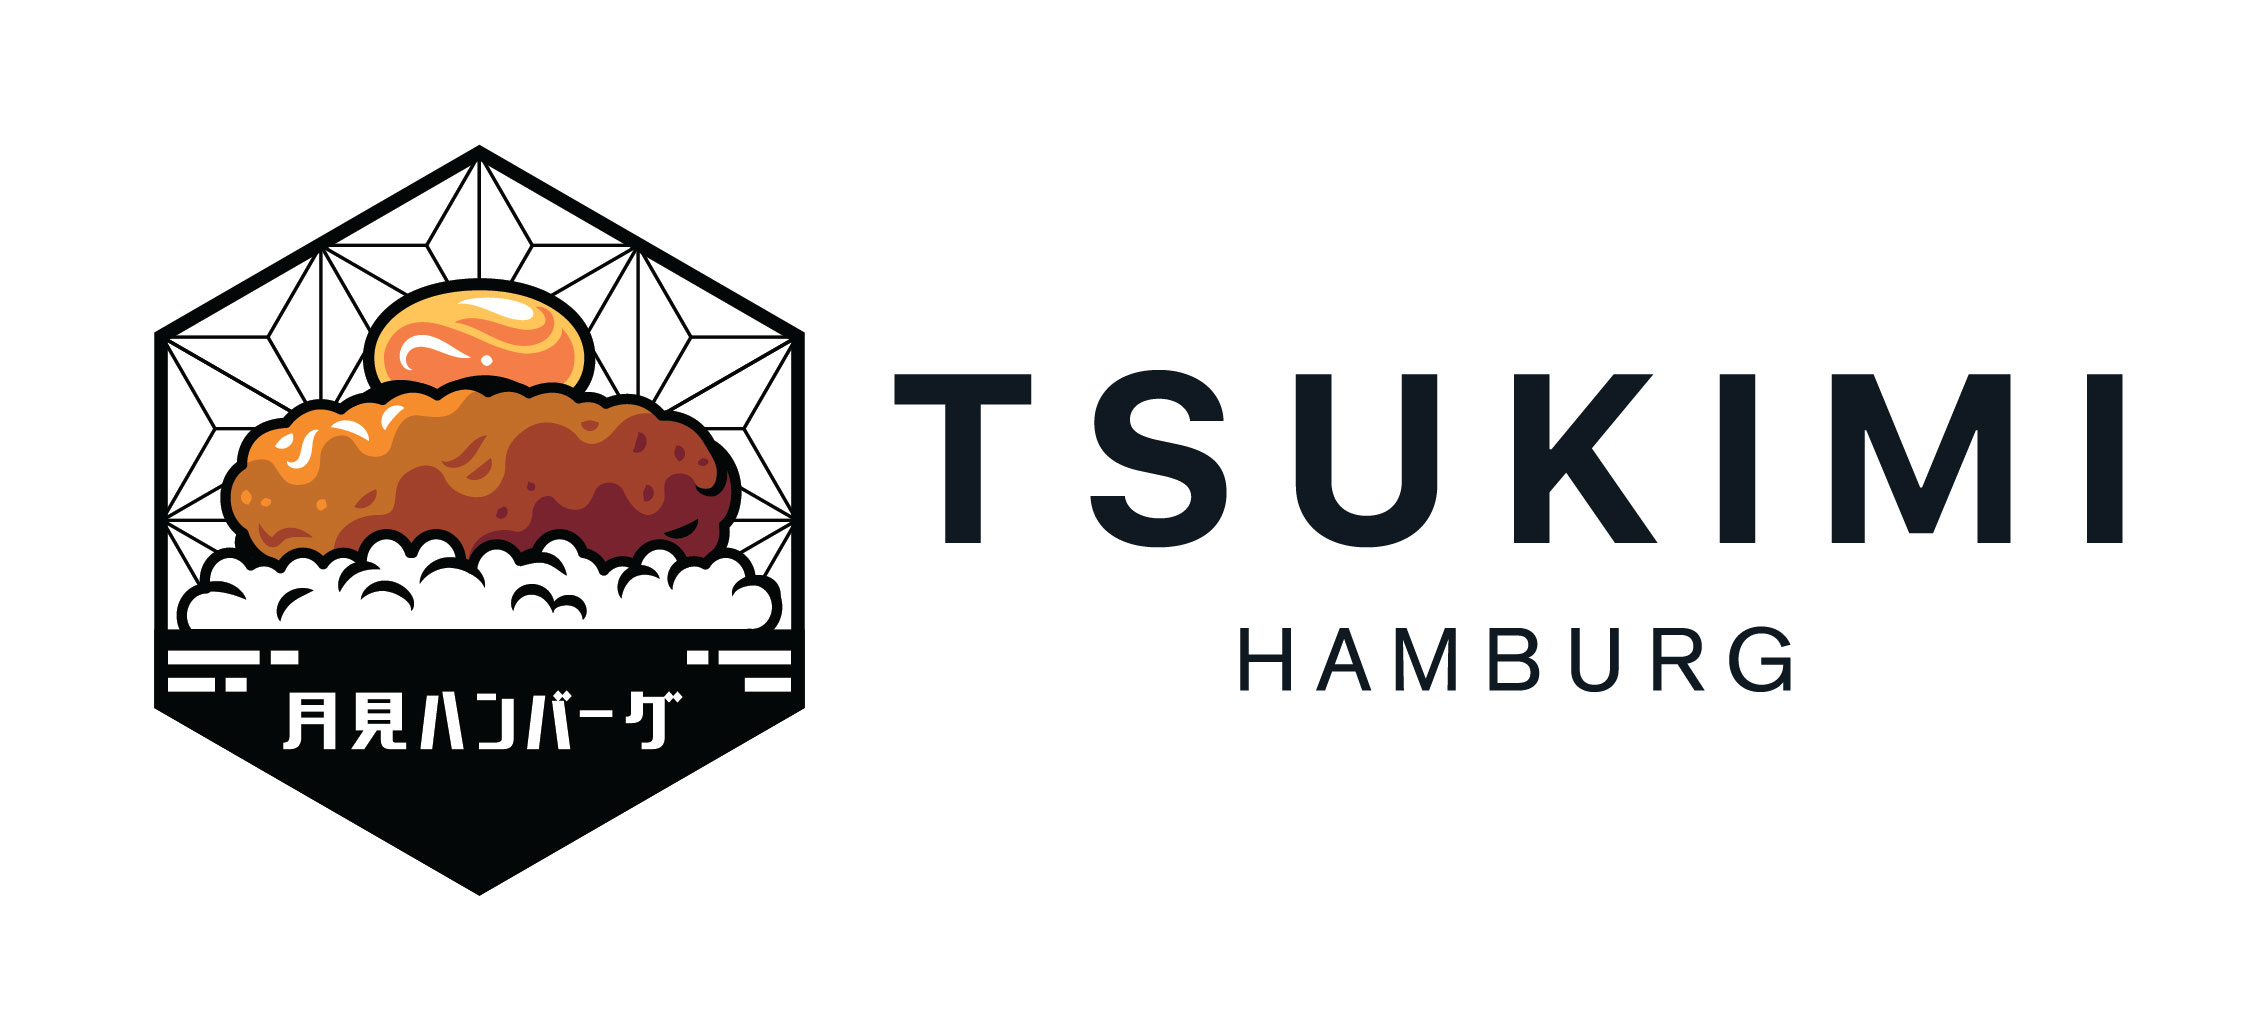 Tsukimi Hamburg